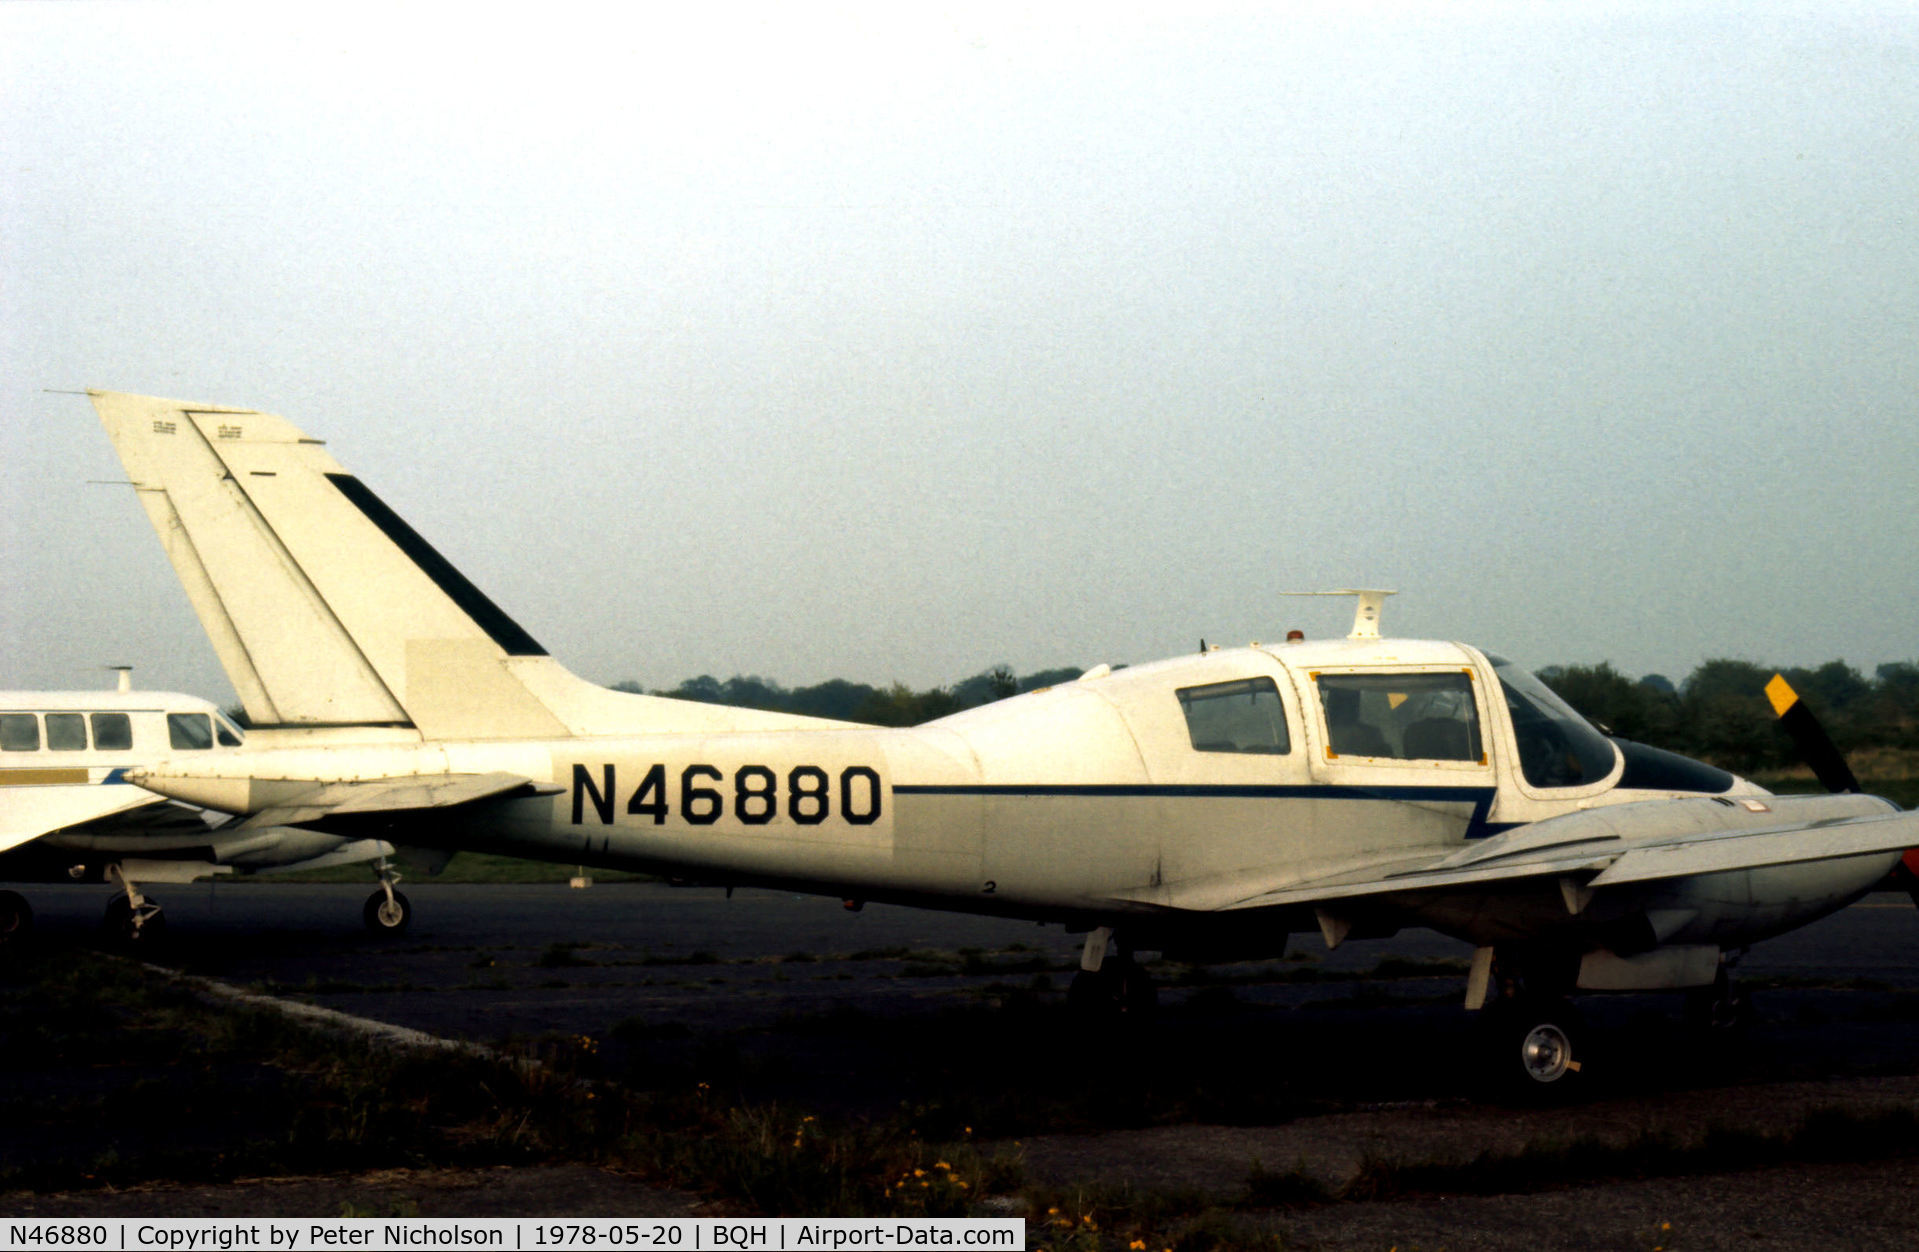 N46880, 1966 Beagle B-206 Series 1 C/N B033, Former RAF Basset CC.1 XS781 awaiting ferry flight to the United States seen at Biggin Hill in May 1978.